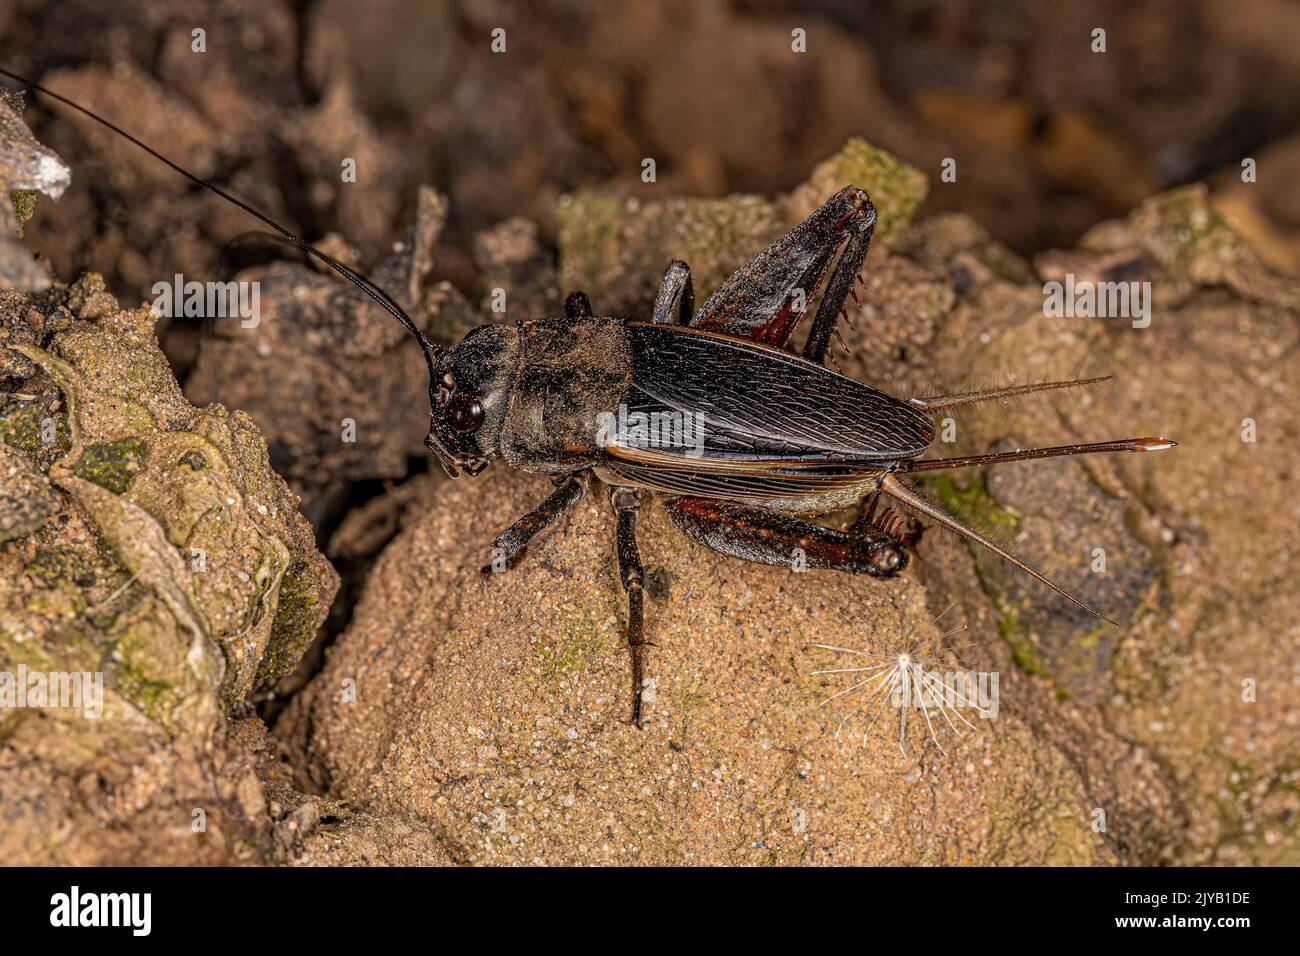 Adult Field Cricket of the Genus Gryllus Stock Photo